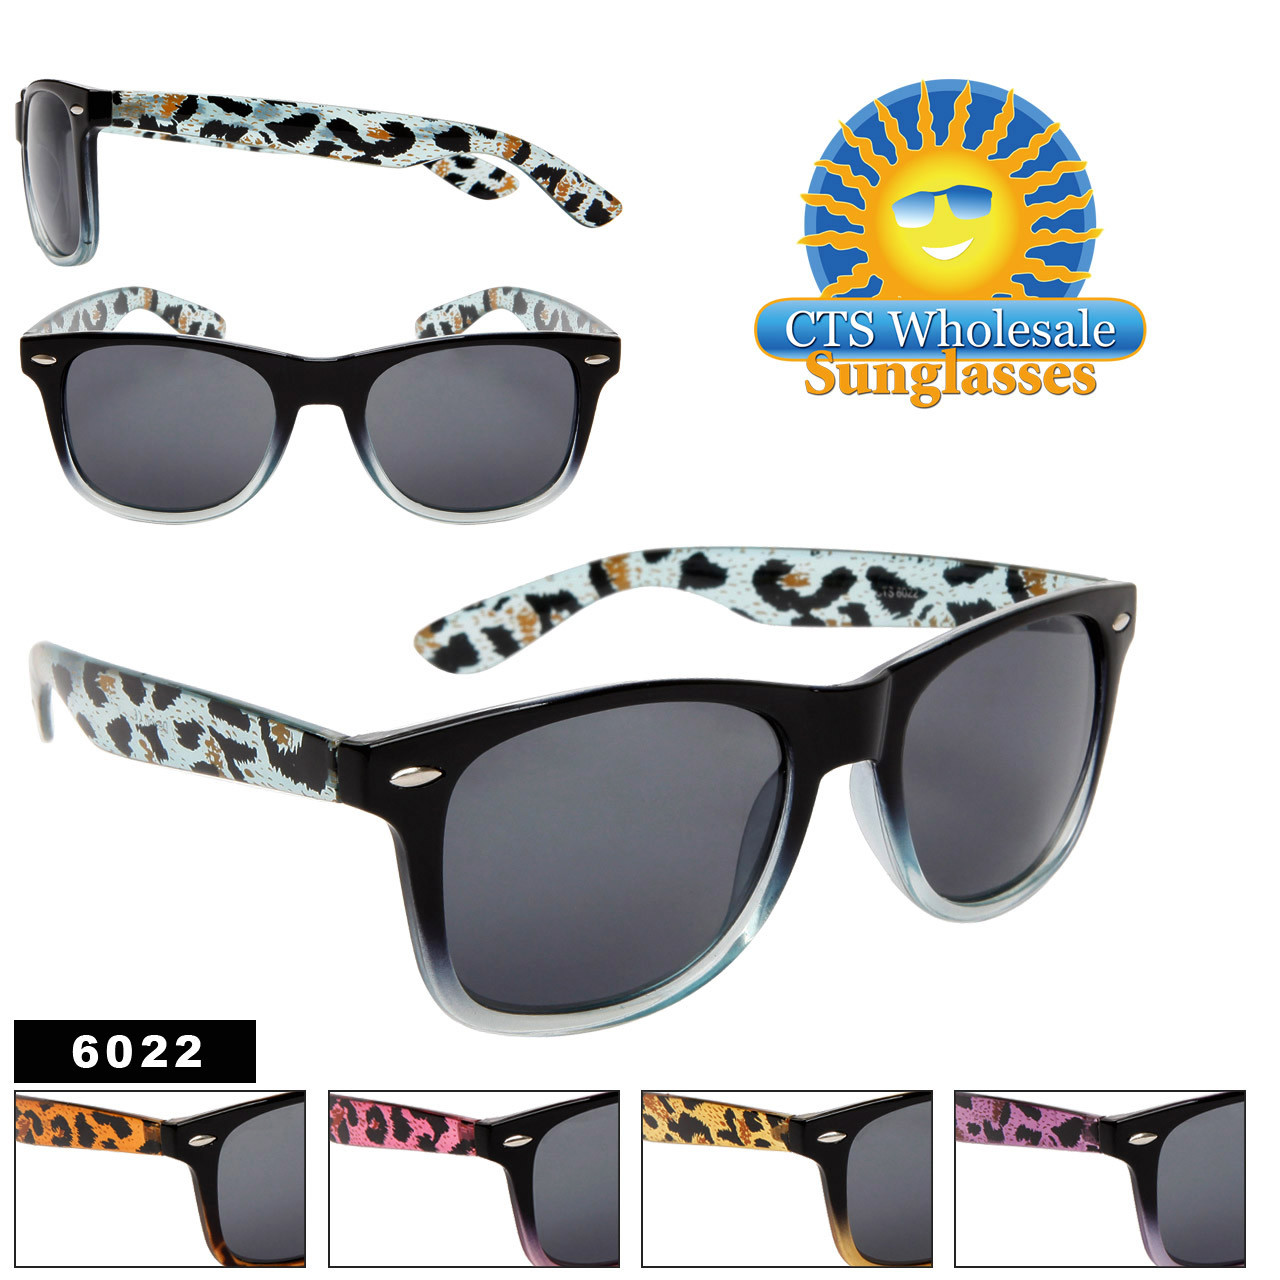 animal print sunglasses